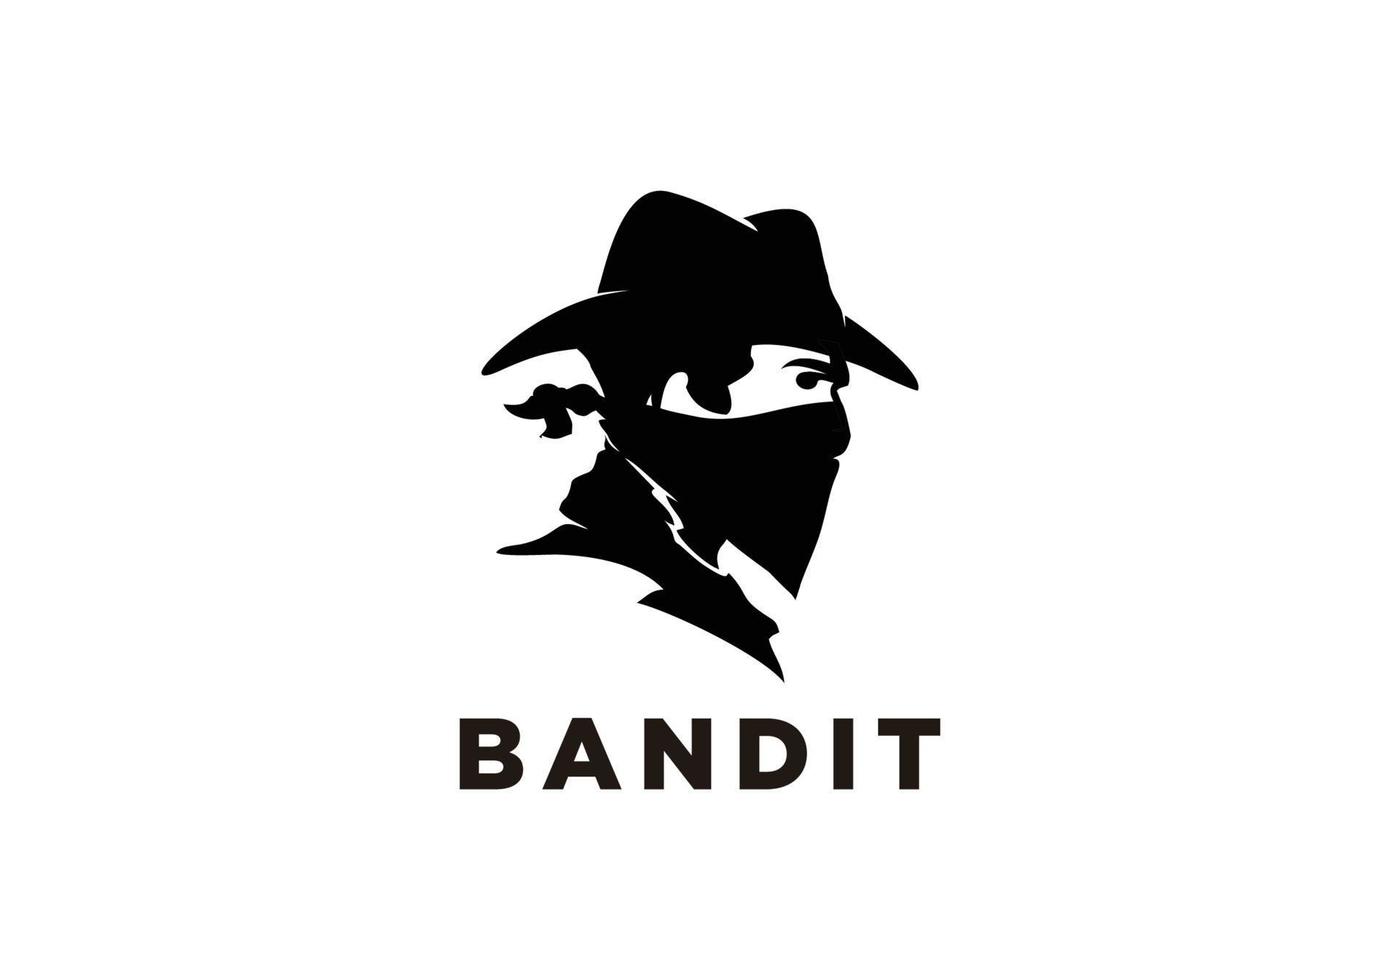 cowboy-bandit mit bandana-schal-maskenillustration vektor